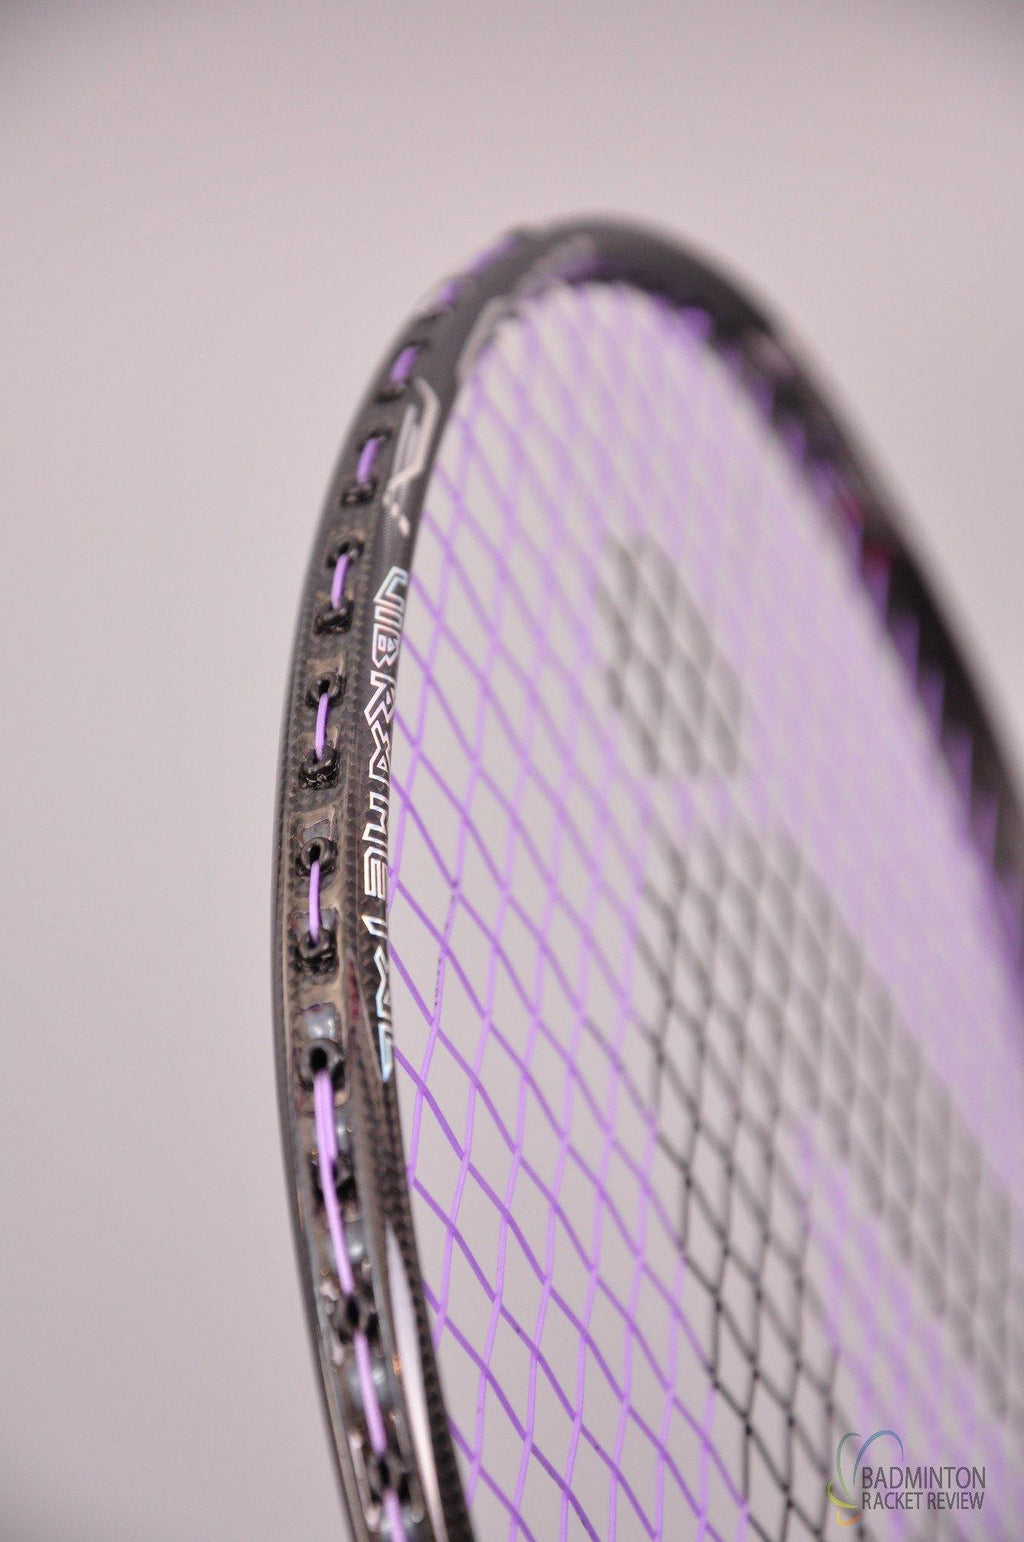 4u Jnice black Panther ltd badminton racket - badminton racket review